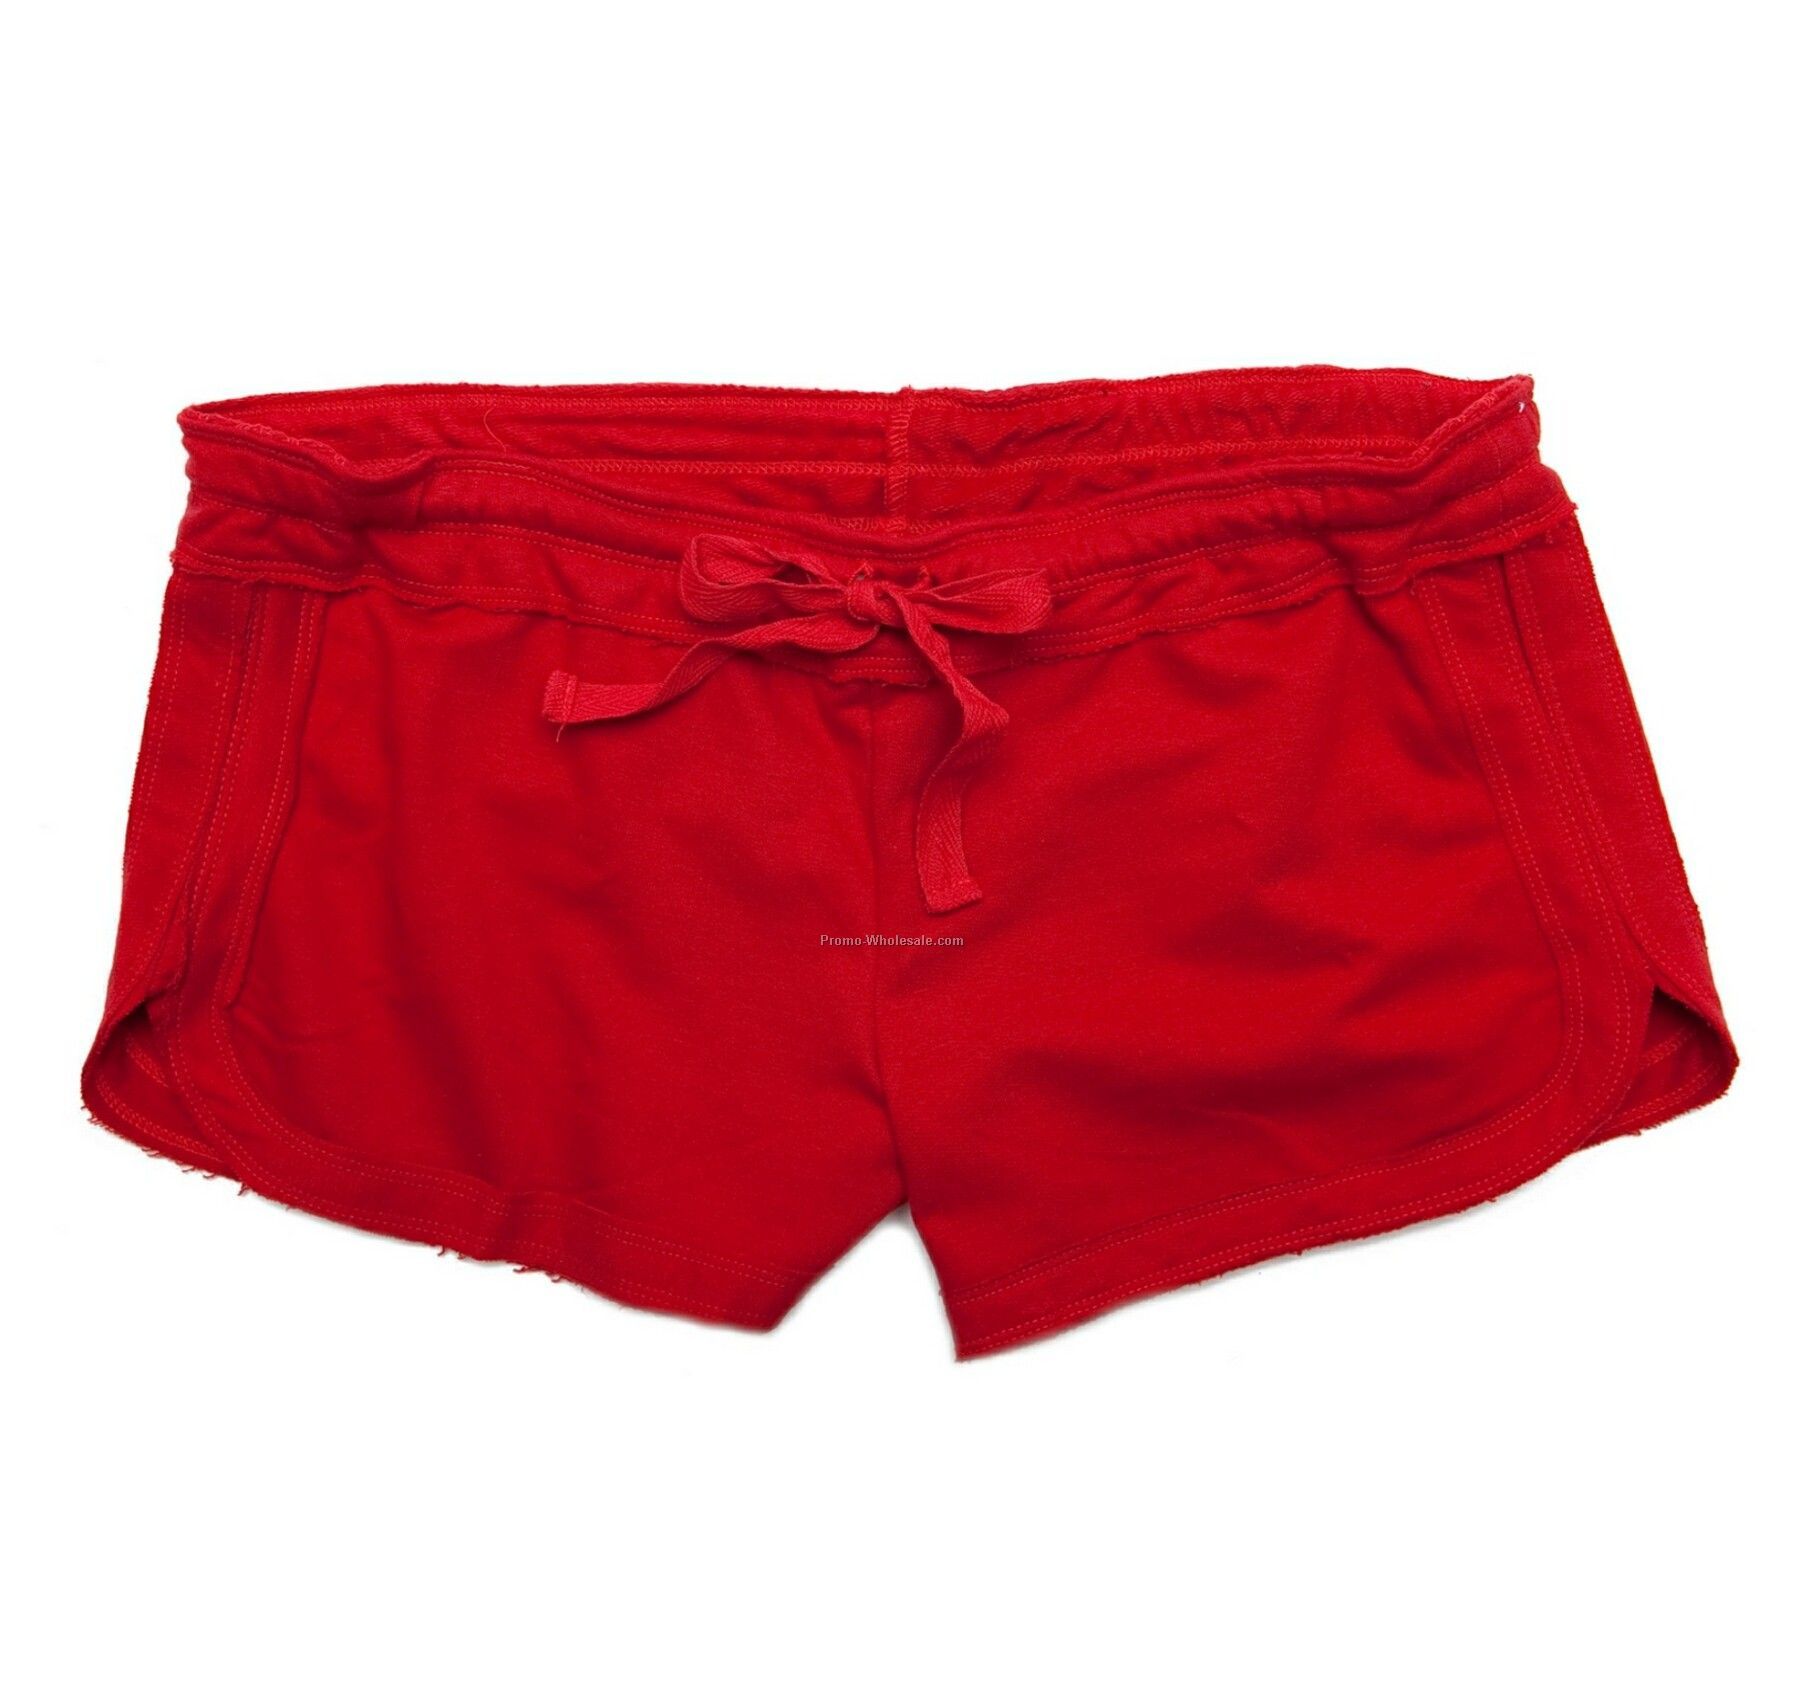 Adults' Red Chrissy Shorts (Xs-xl)